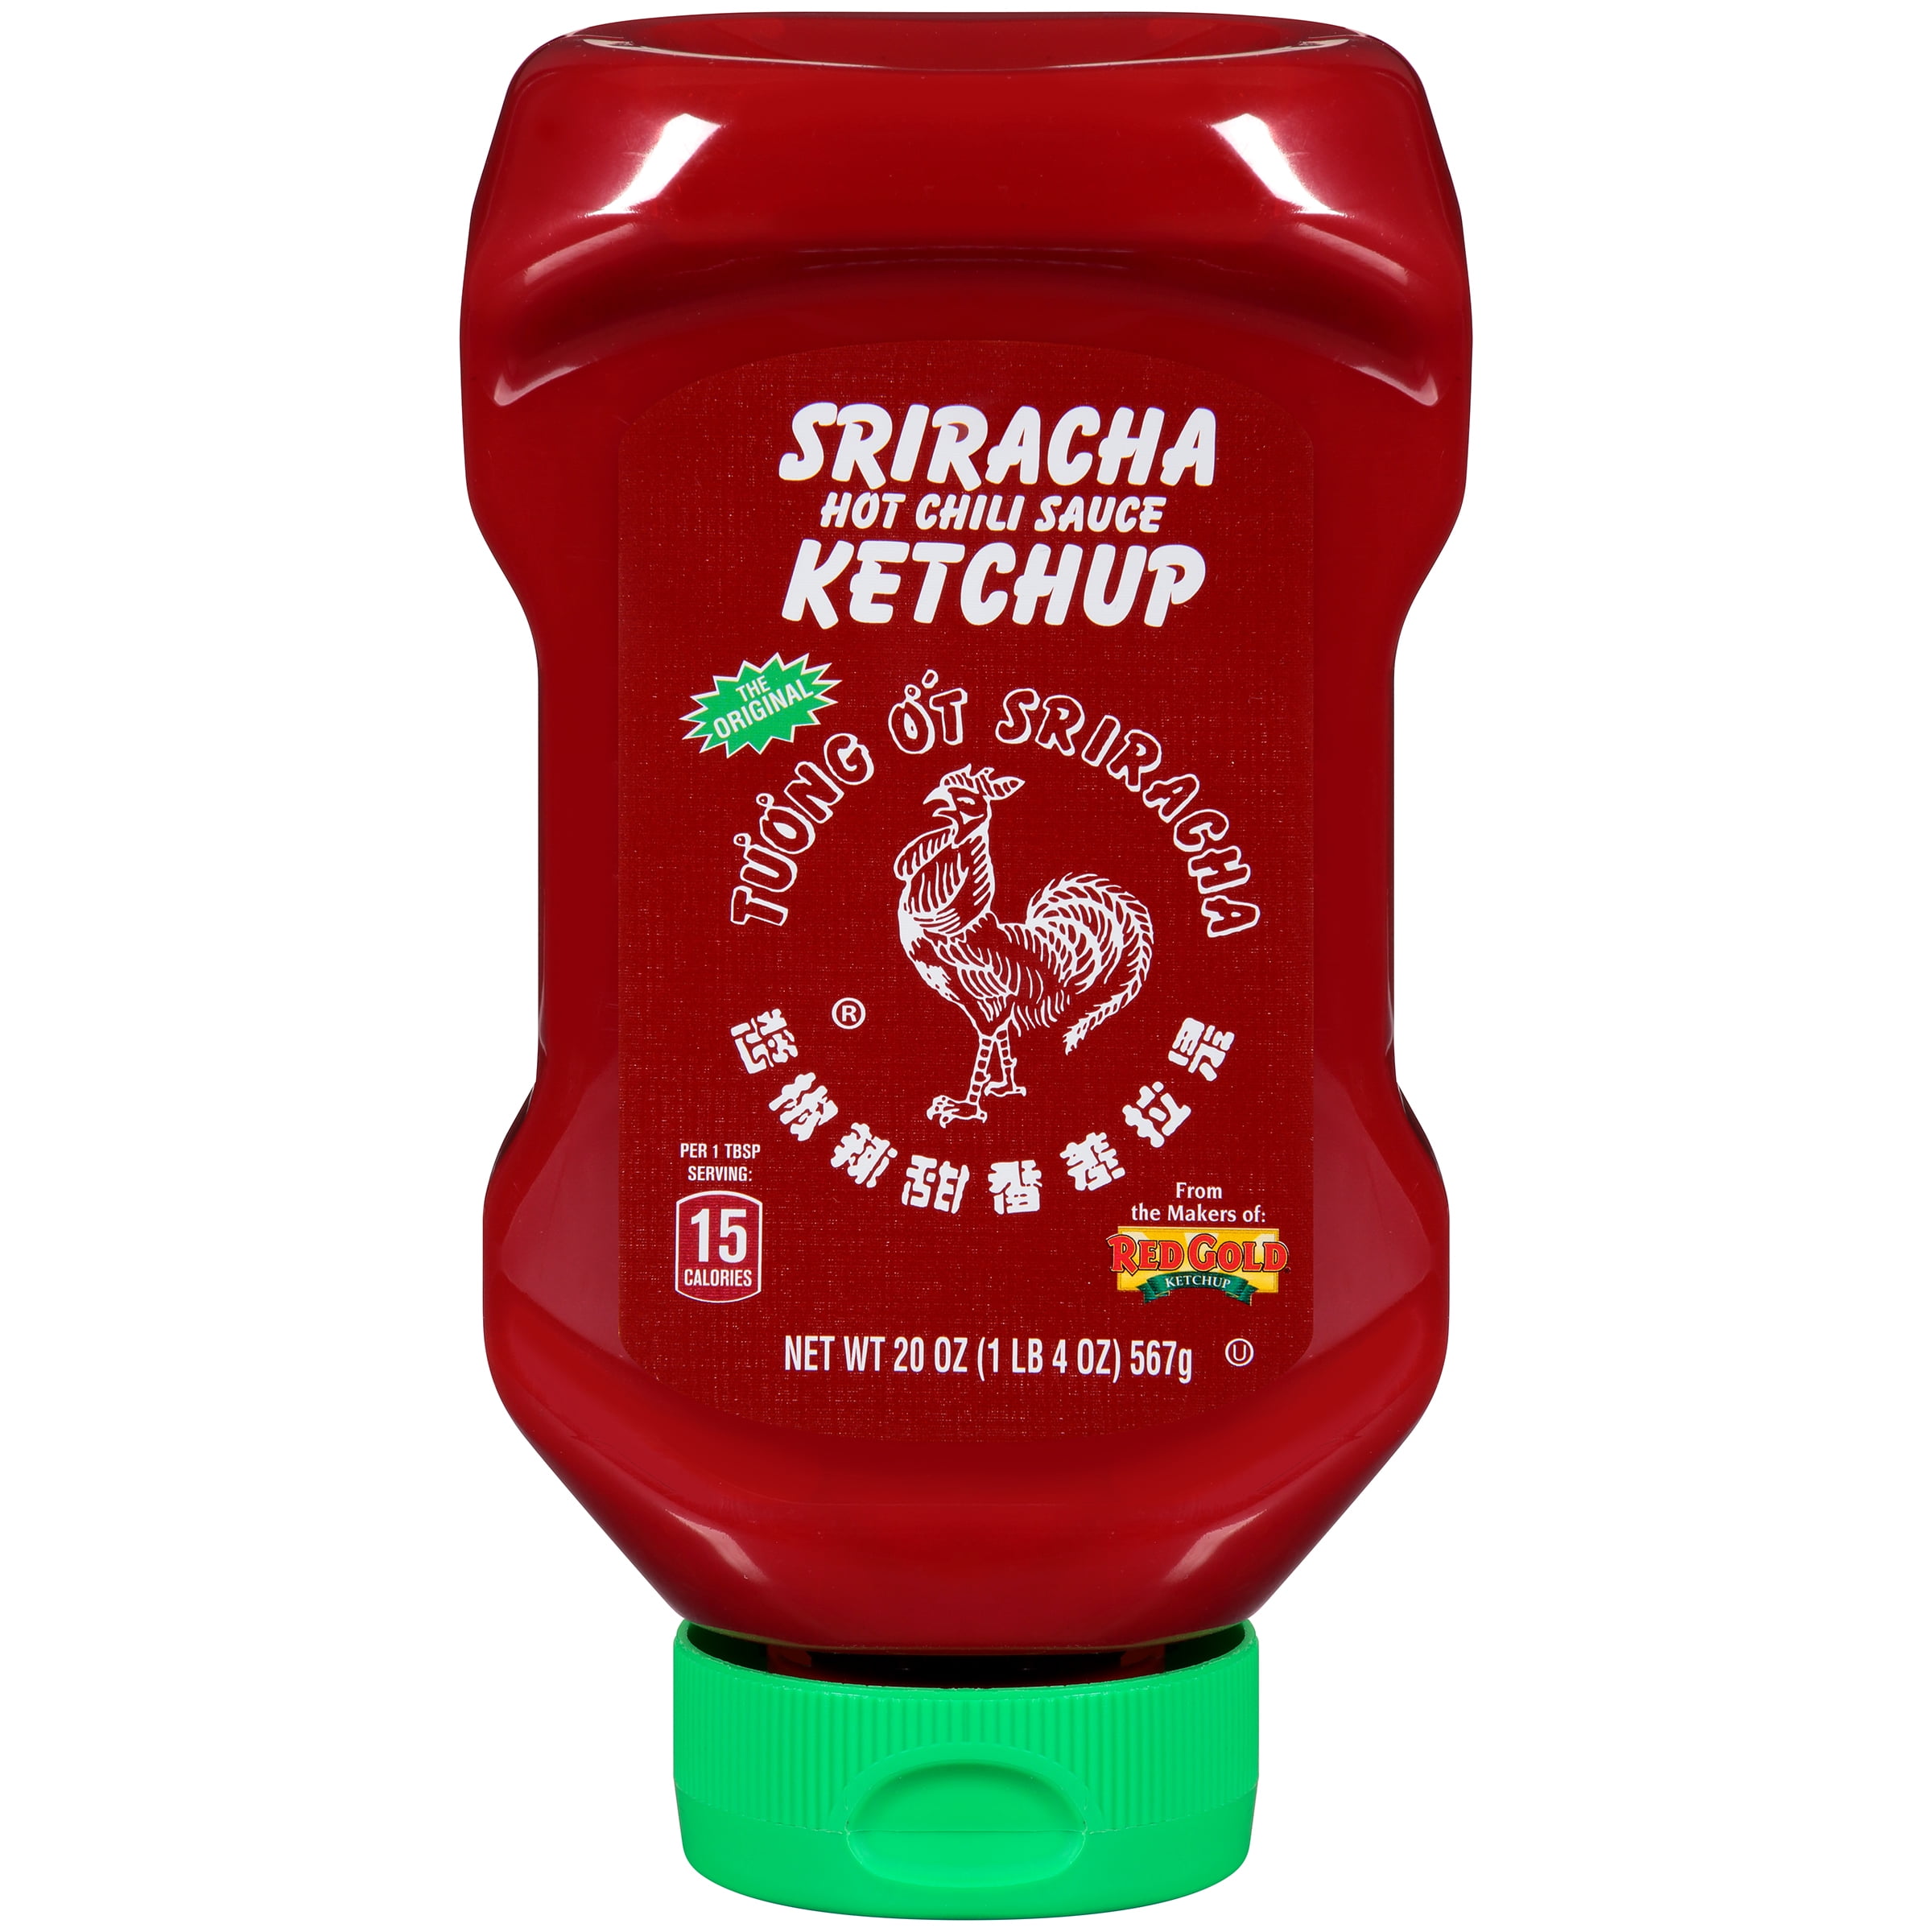 Huy Fong Sriracha Hot Chili Sauce Ketchup Oz Walmart Com Walmart Com